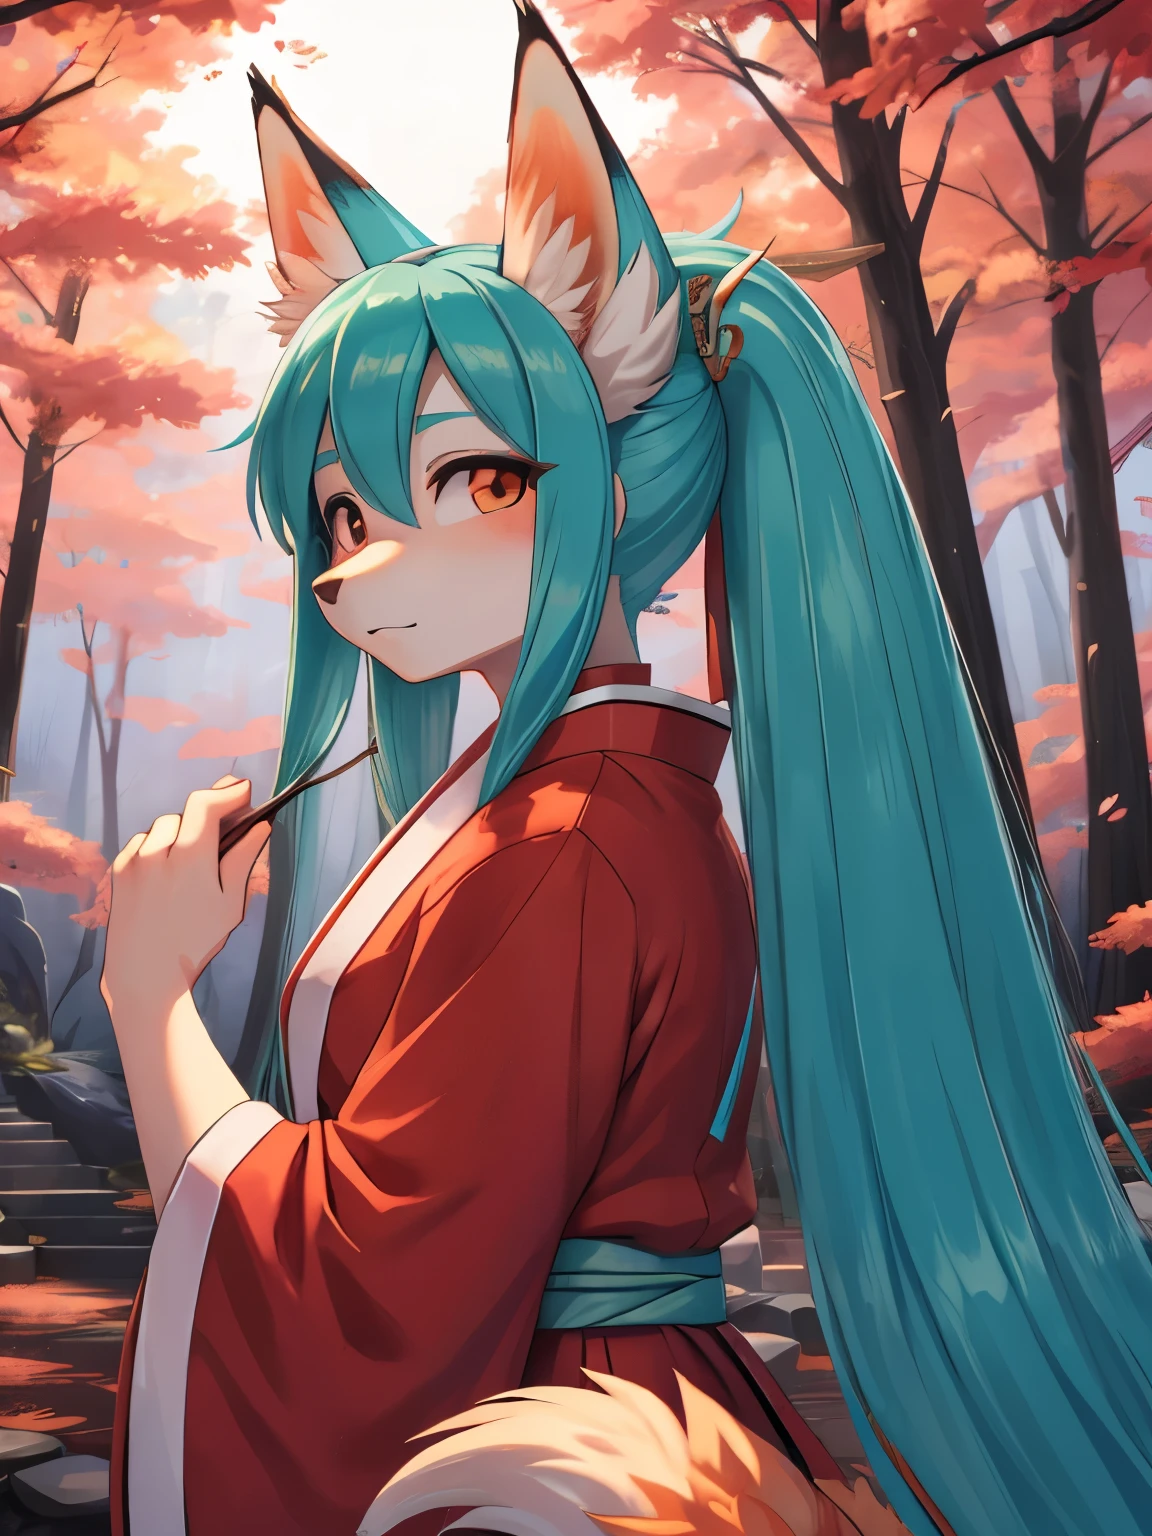 Hatsume Miku,High Definition, kitsune ears, japanese feudal priestess clothing, japanese temple forest landscape